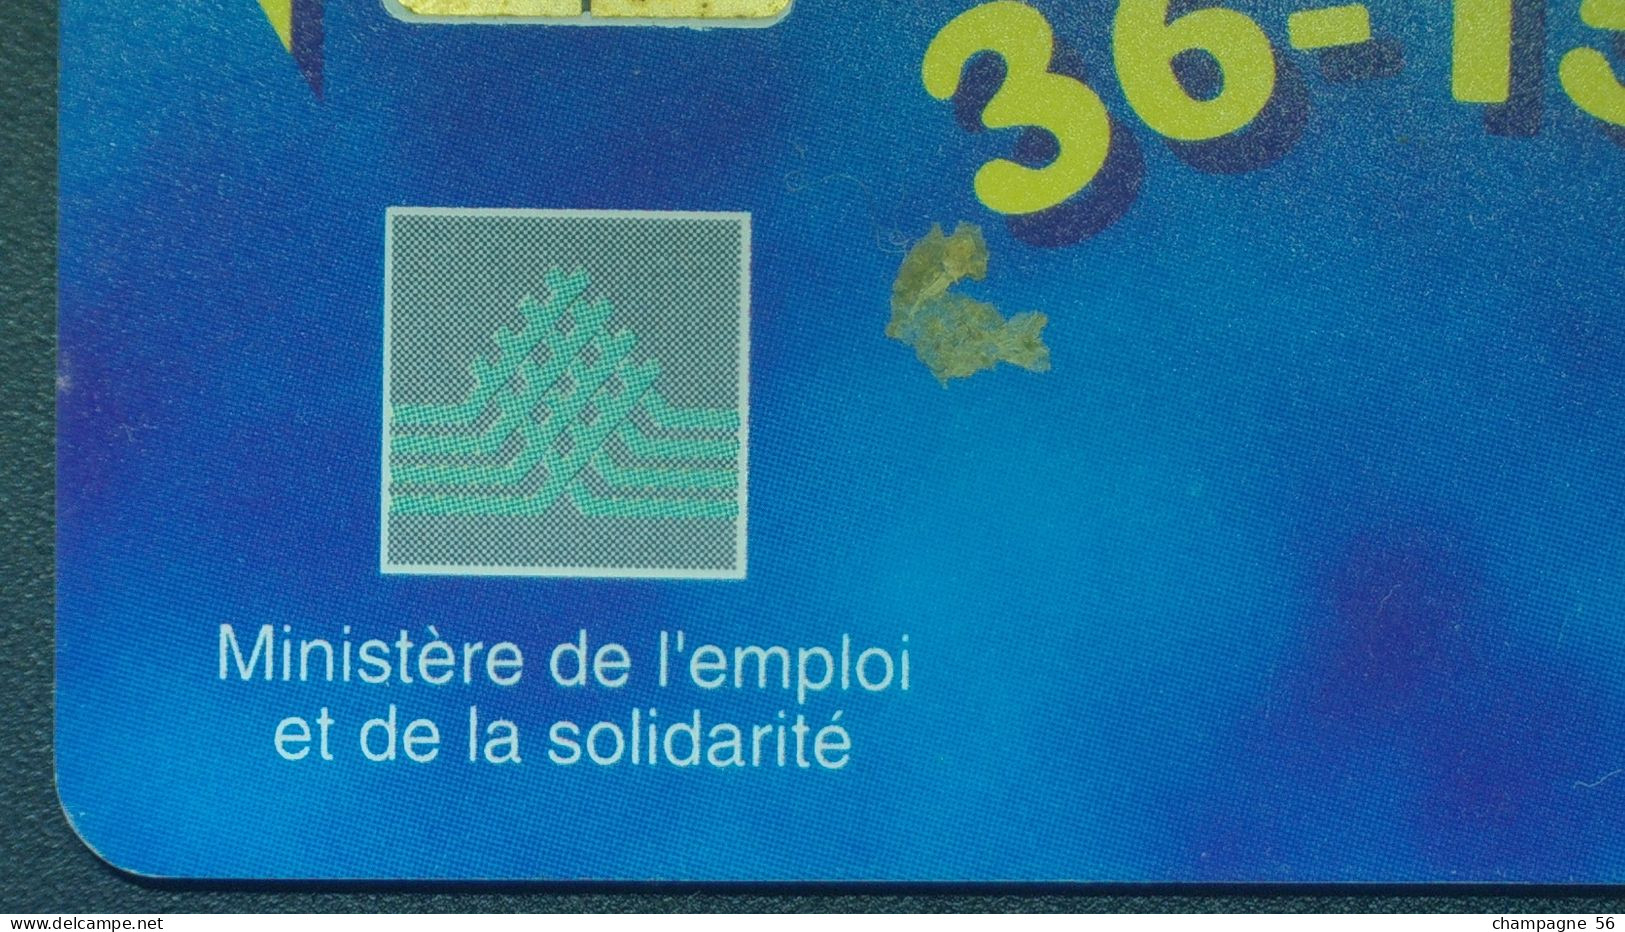 VARIÉTÉS FRANCE 97 F804  50 / 11 / 97 SO3 LE 36-15 EMPLOI   50 UNITES UTILISÉE - Errors And Oddities